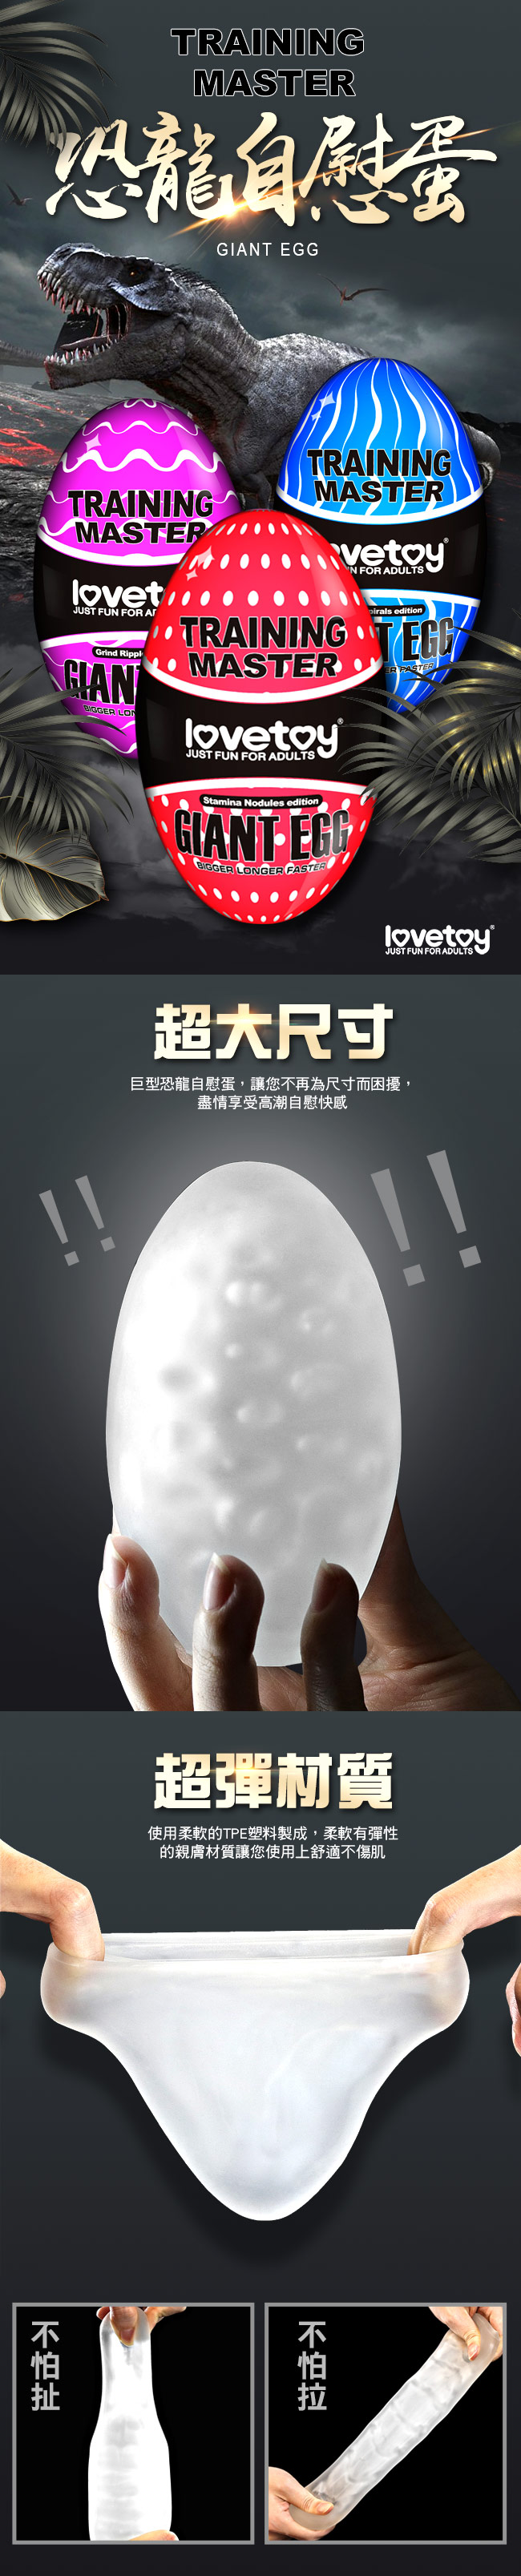 Lovetoy．Training Master Giant Egg 恐龍自慰蛋-網狀波紋款(紫色)